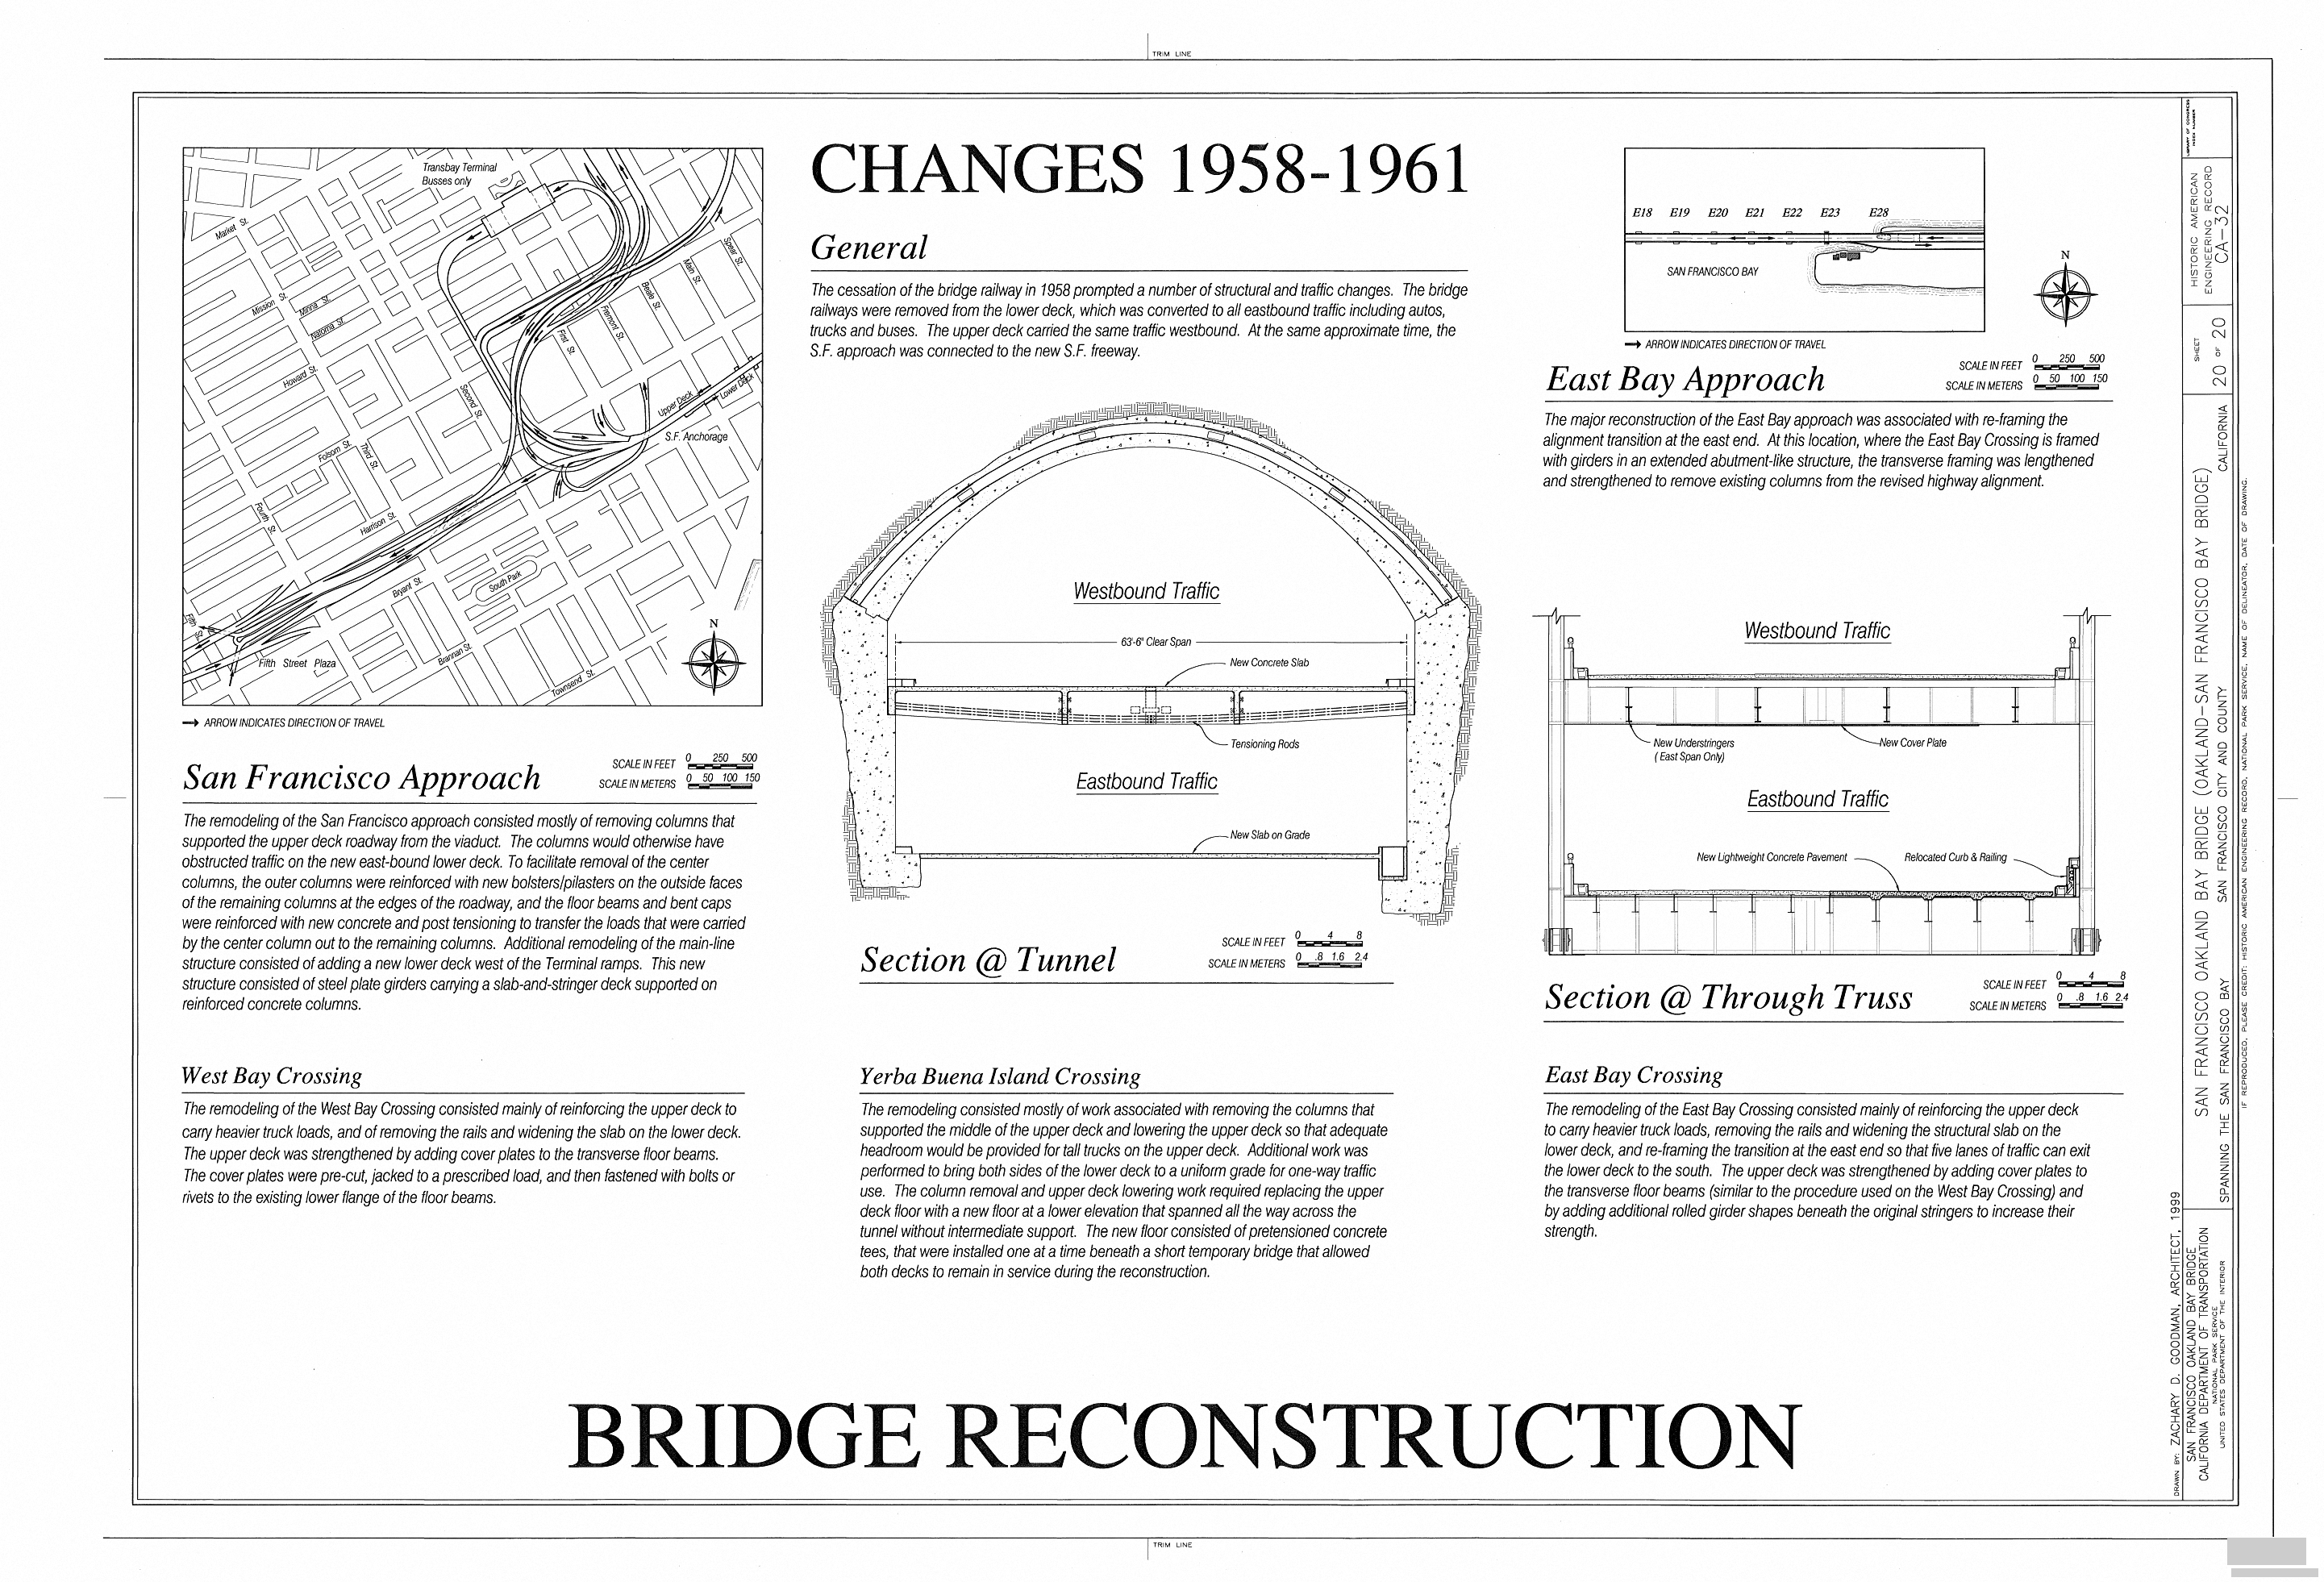 Bridge_Reconstruction,_Changes_1958-1961_-_San_Francisco_Oakland_Bay_Bridge,_Spa.png